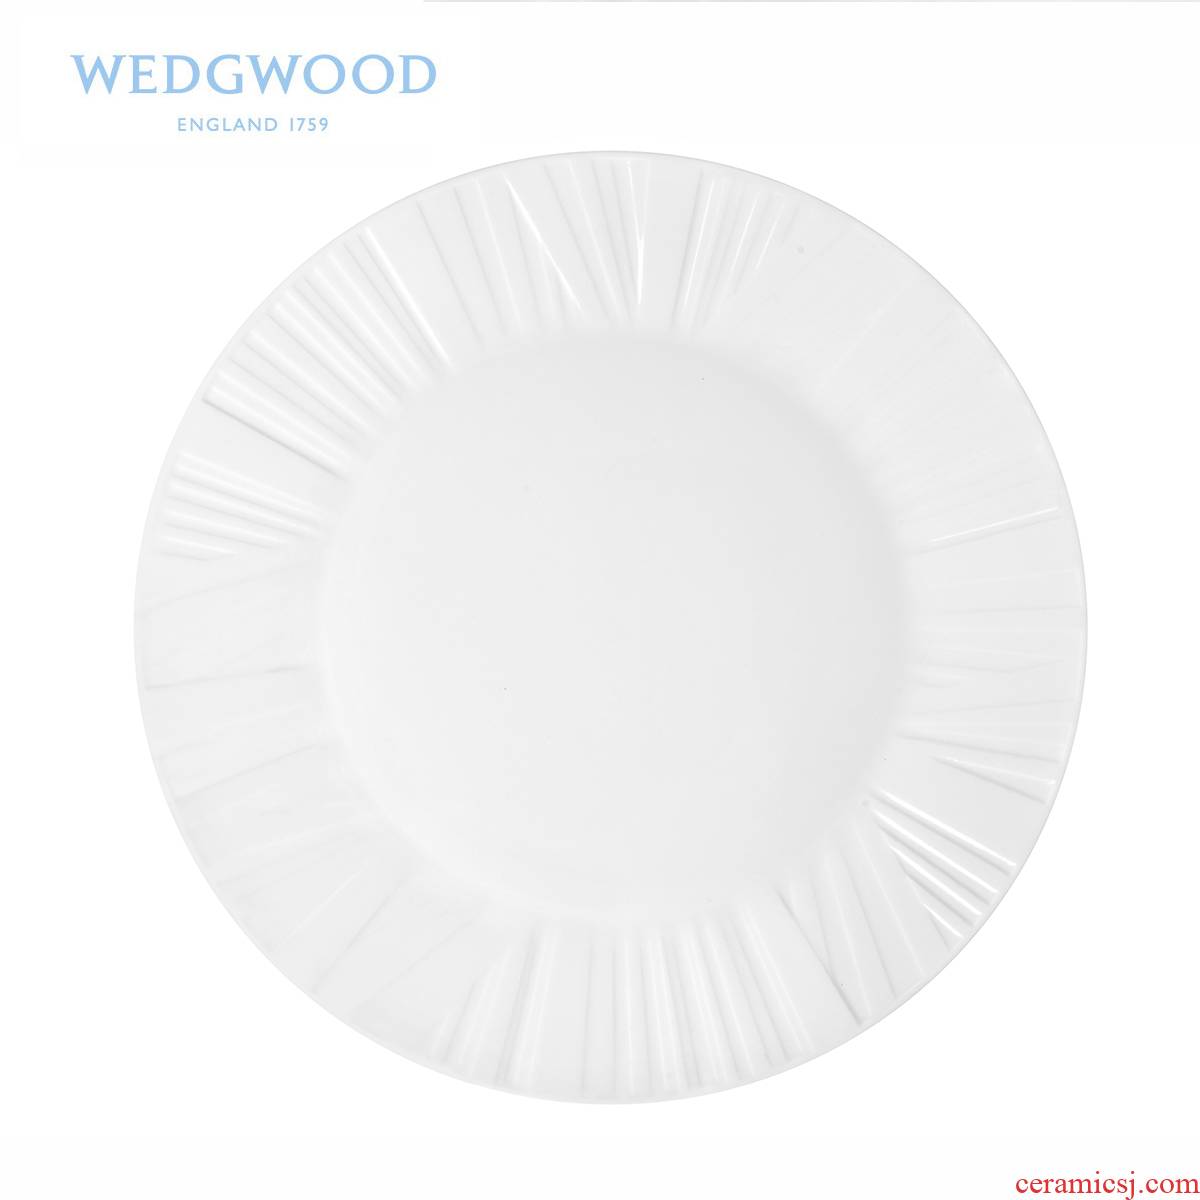 British Wedgwood Vera Wang love yarn ipads porcelain plates only pack elegant wedding